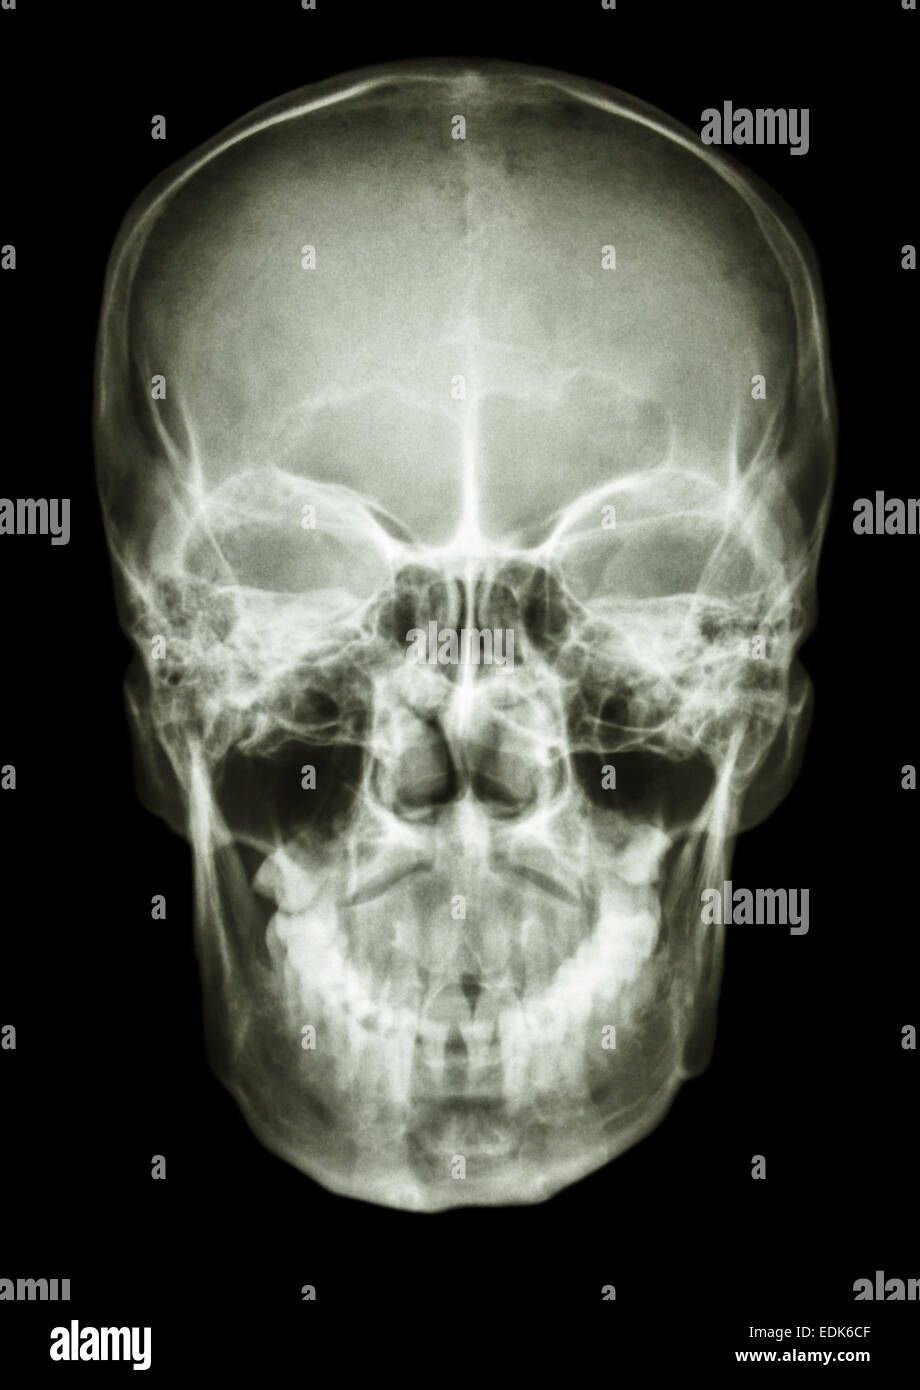 film x-ray skull AP : show normal human's skull Stock Photo